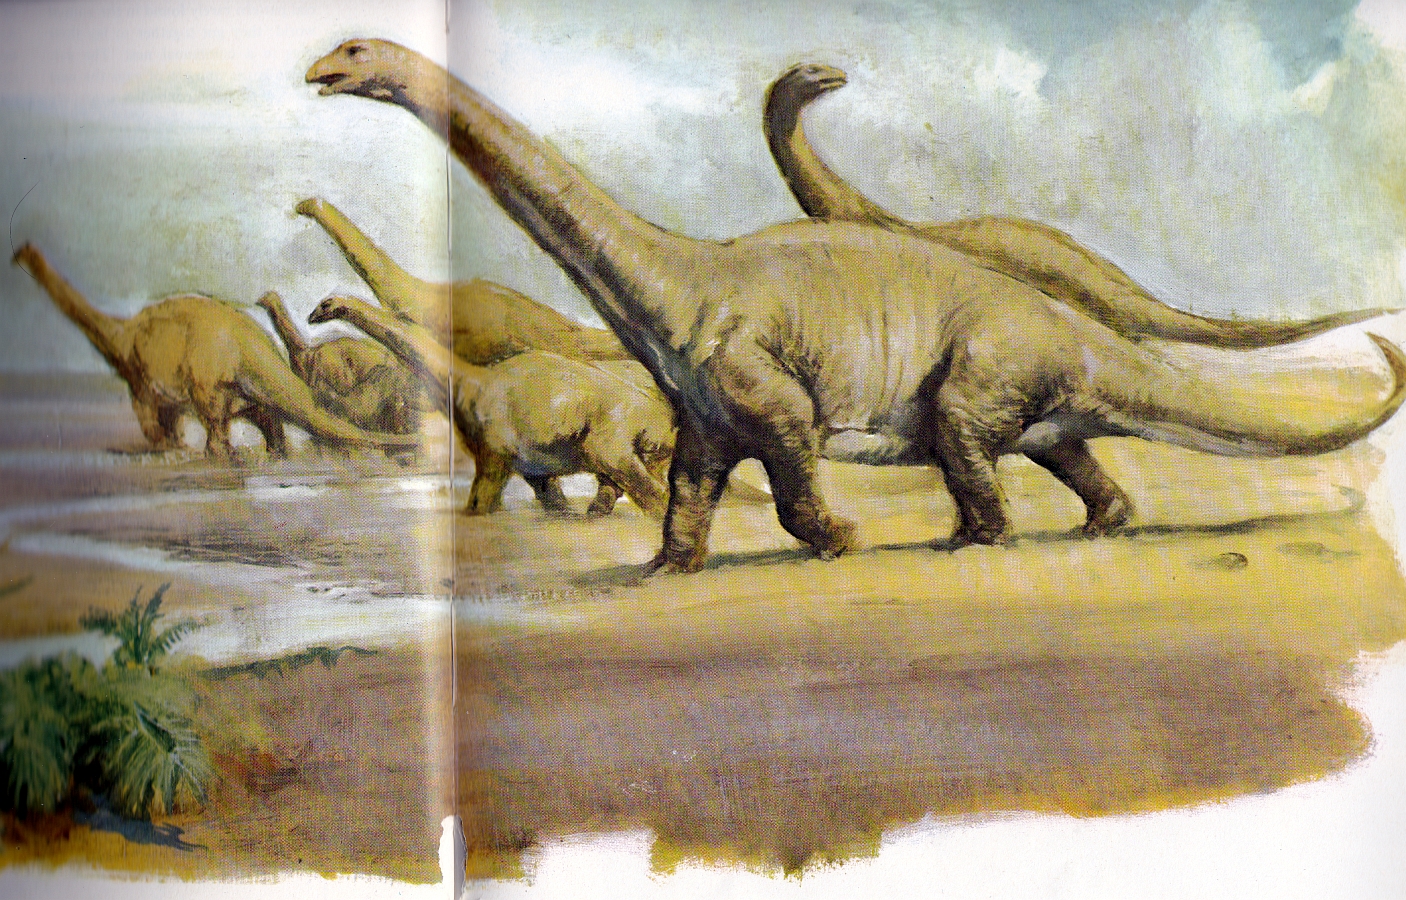 Brontosaurus by Burt Silverman